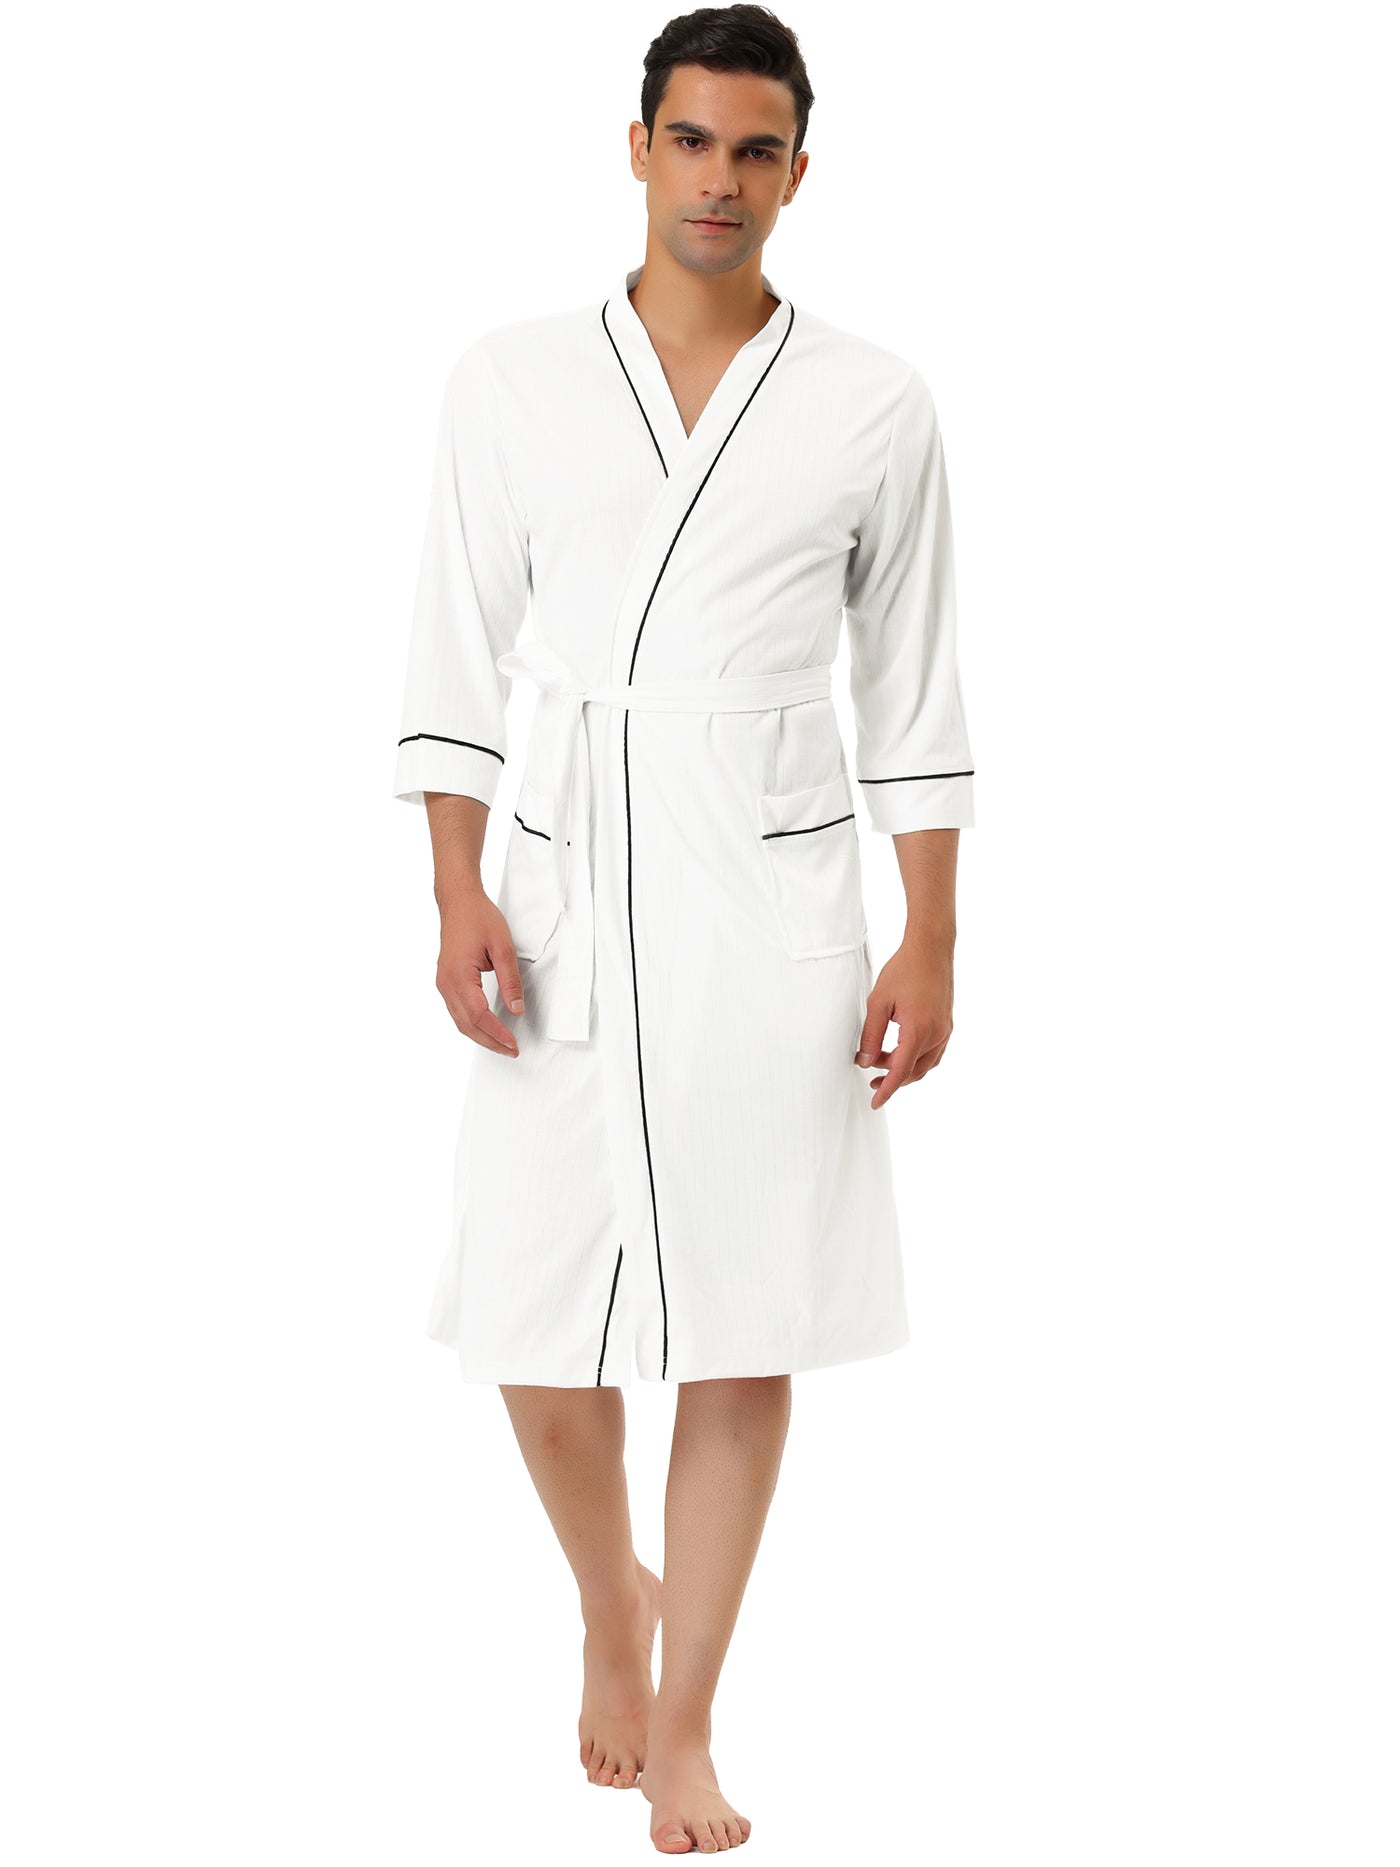 Bublédon Knit Lightweight Plain Spa Long Sleeve Bathing Robe